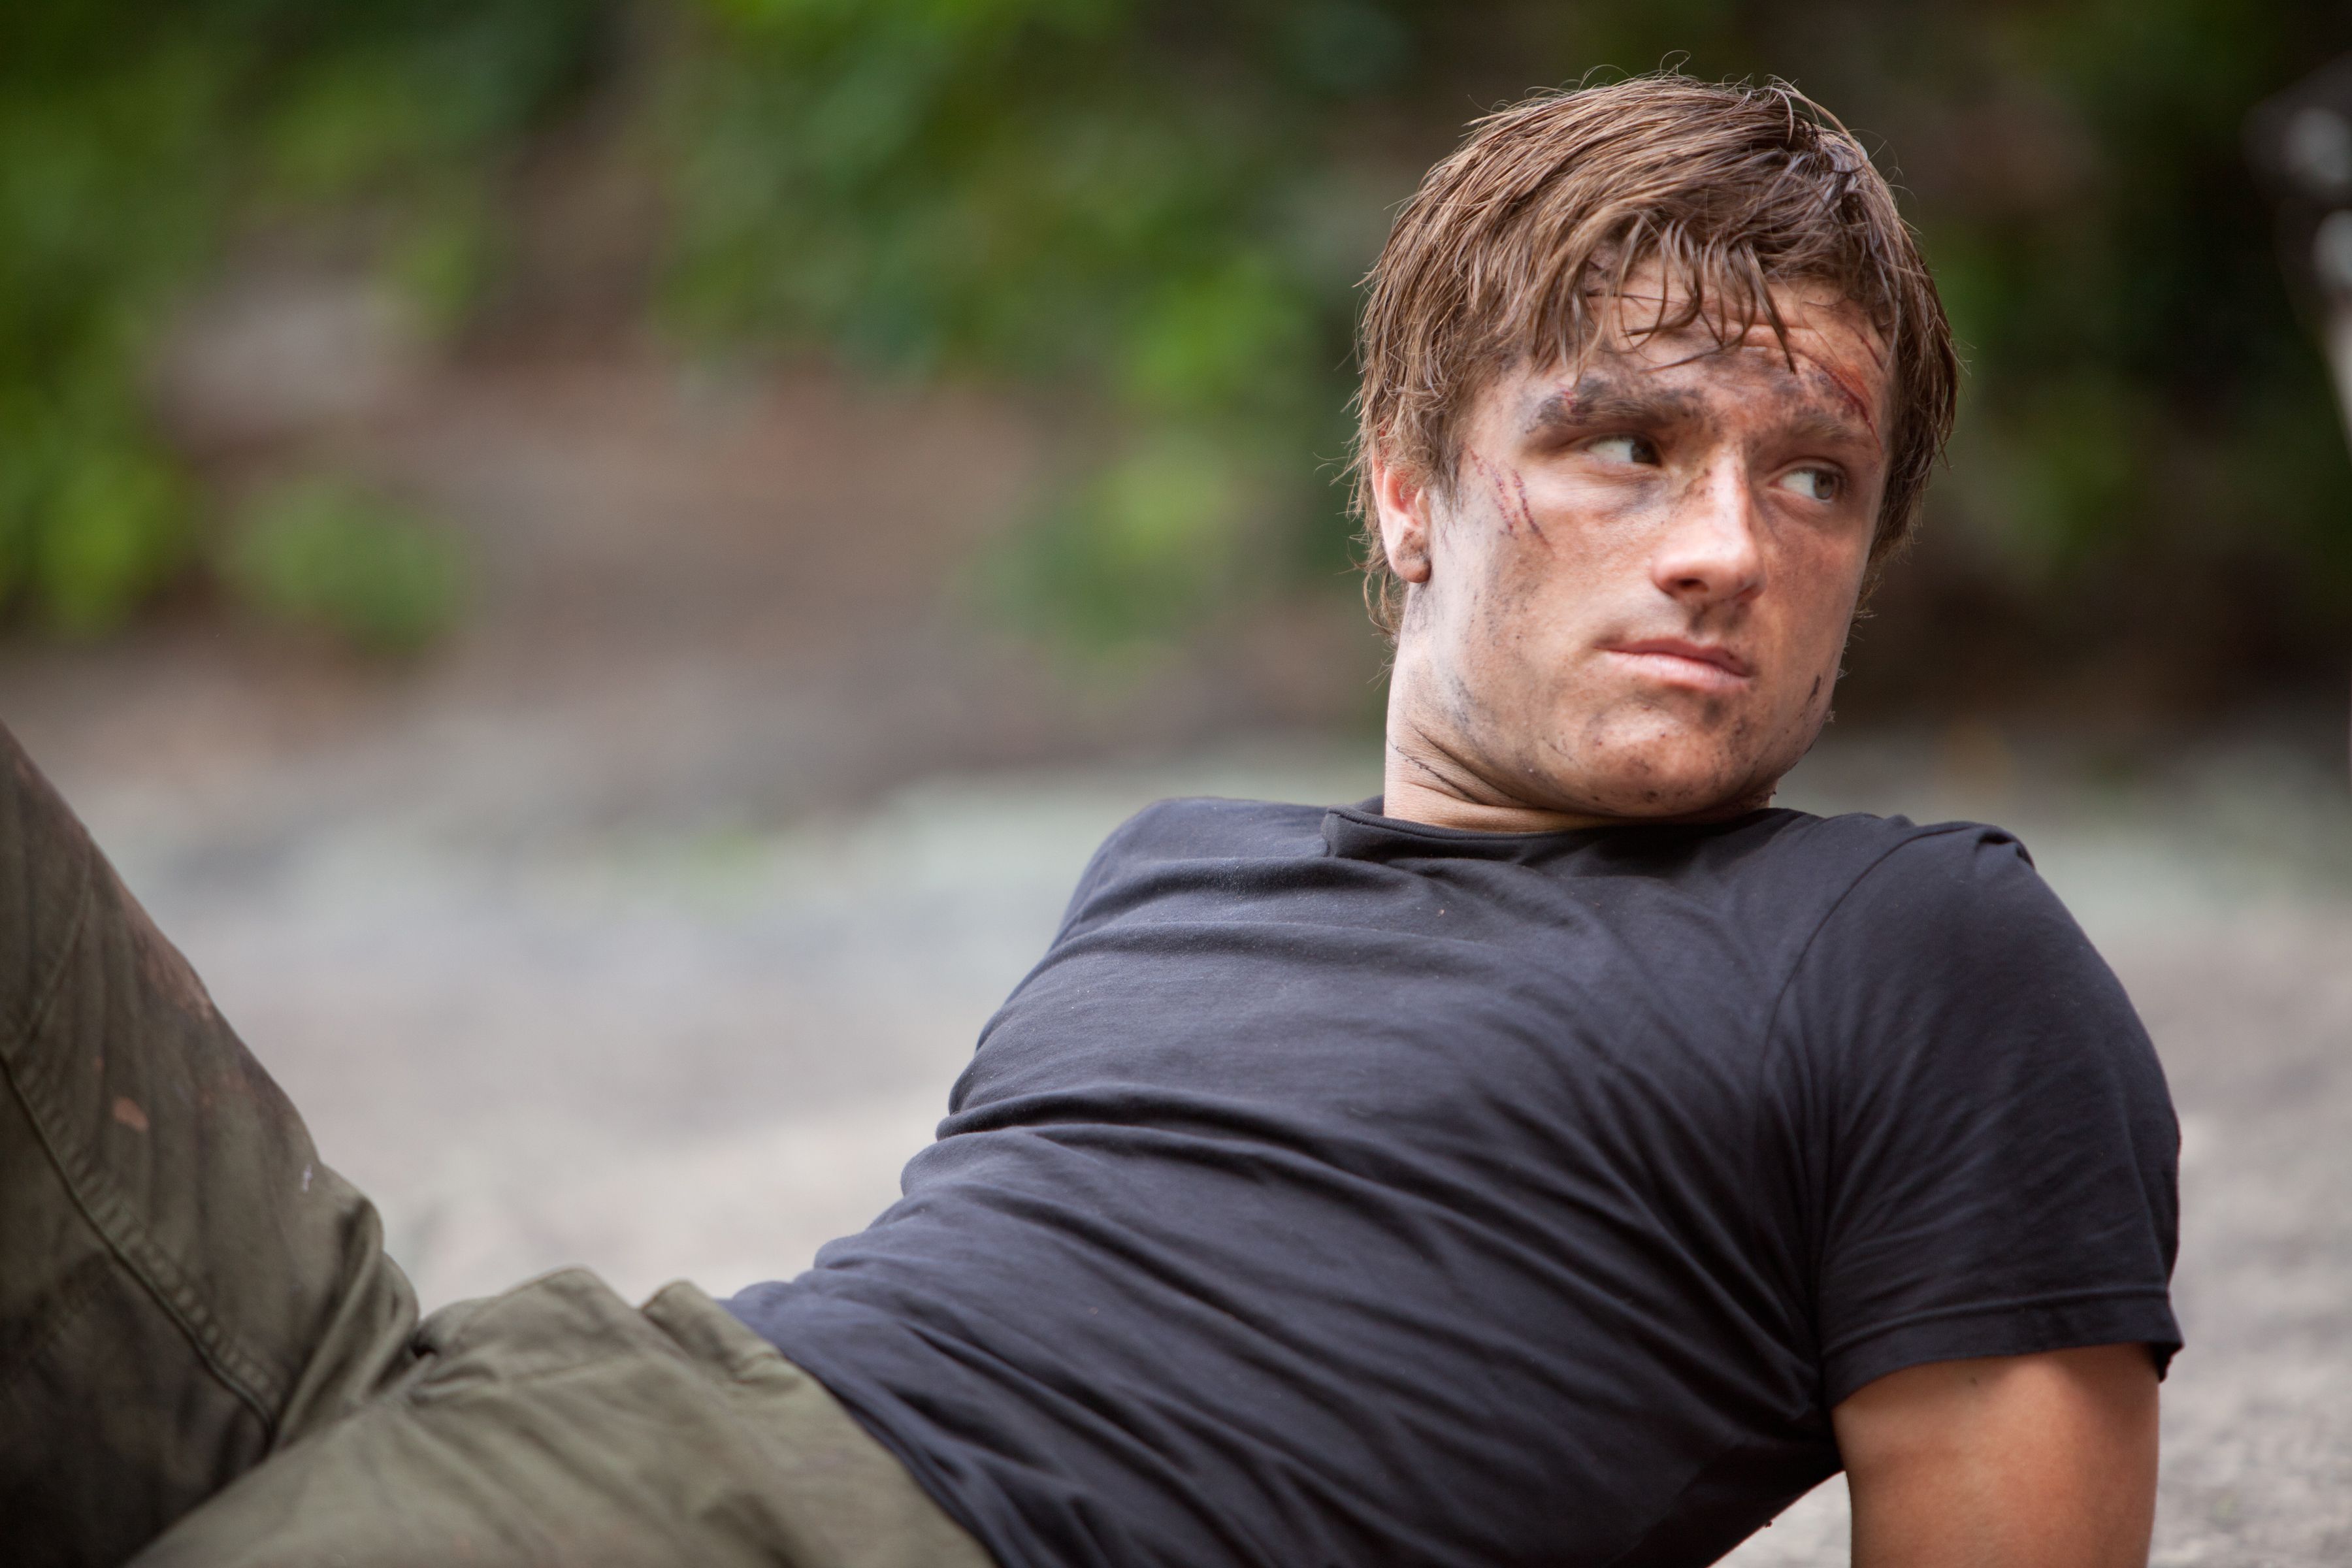 Josh Hutcherson's Peeta Mellark leaning back on a rock in The Hunger Games.